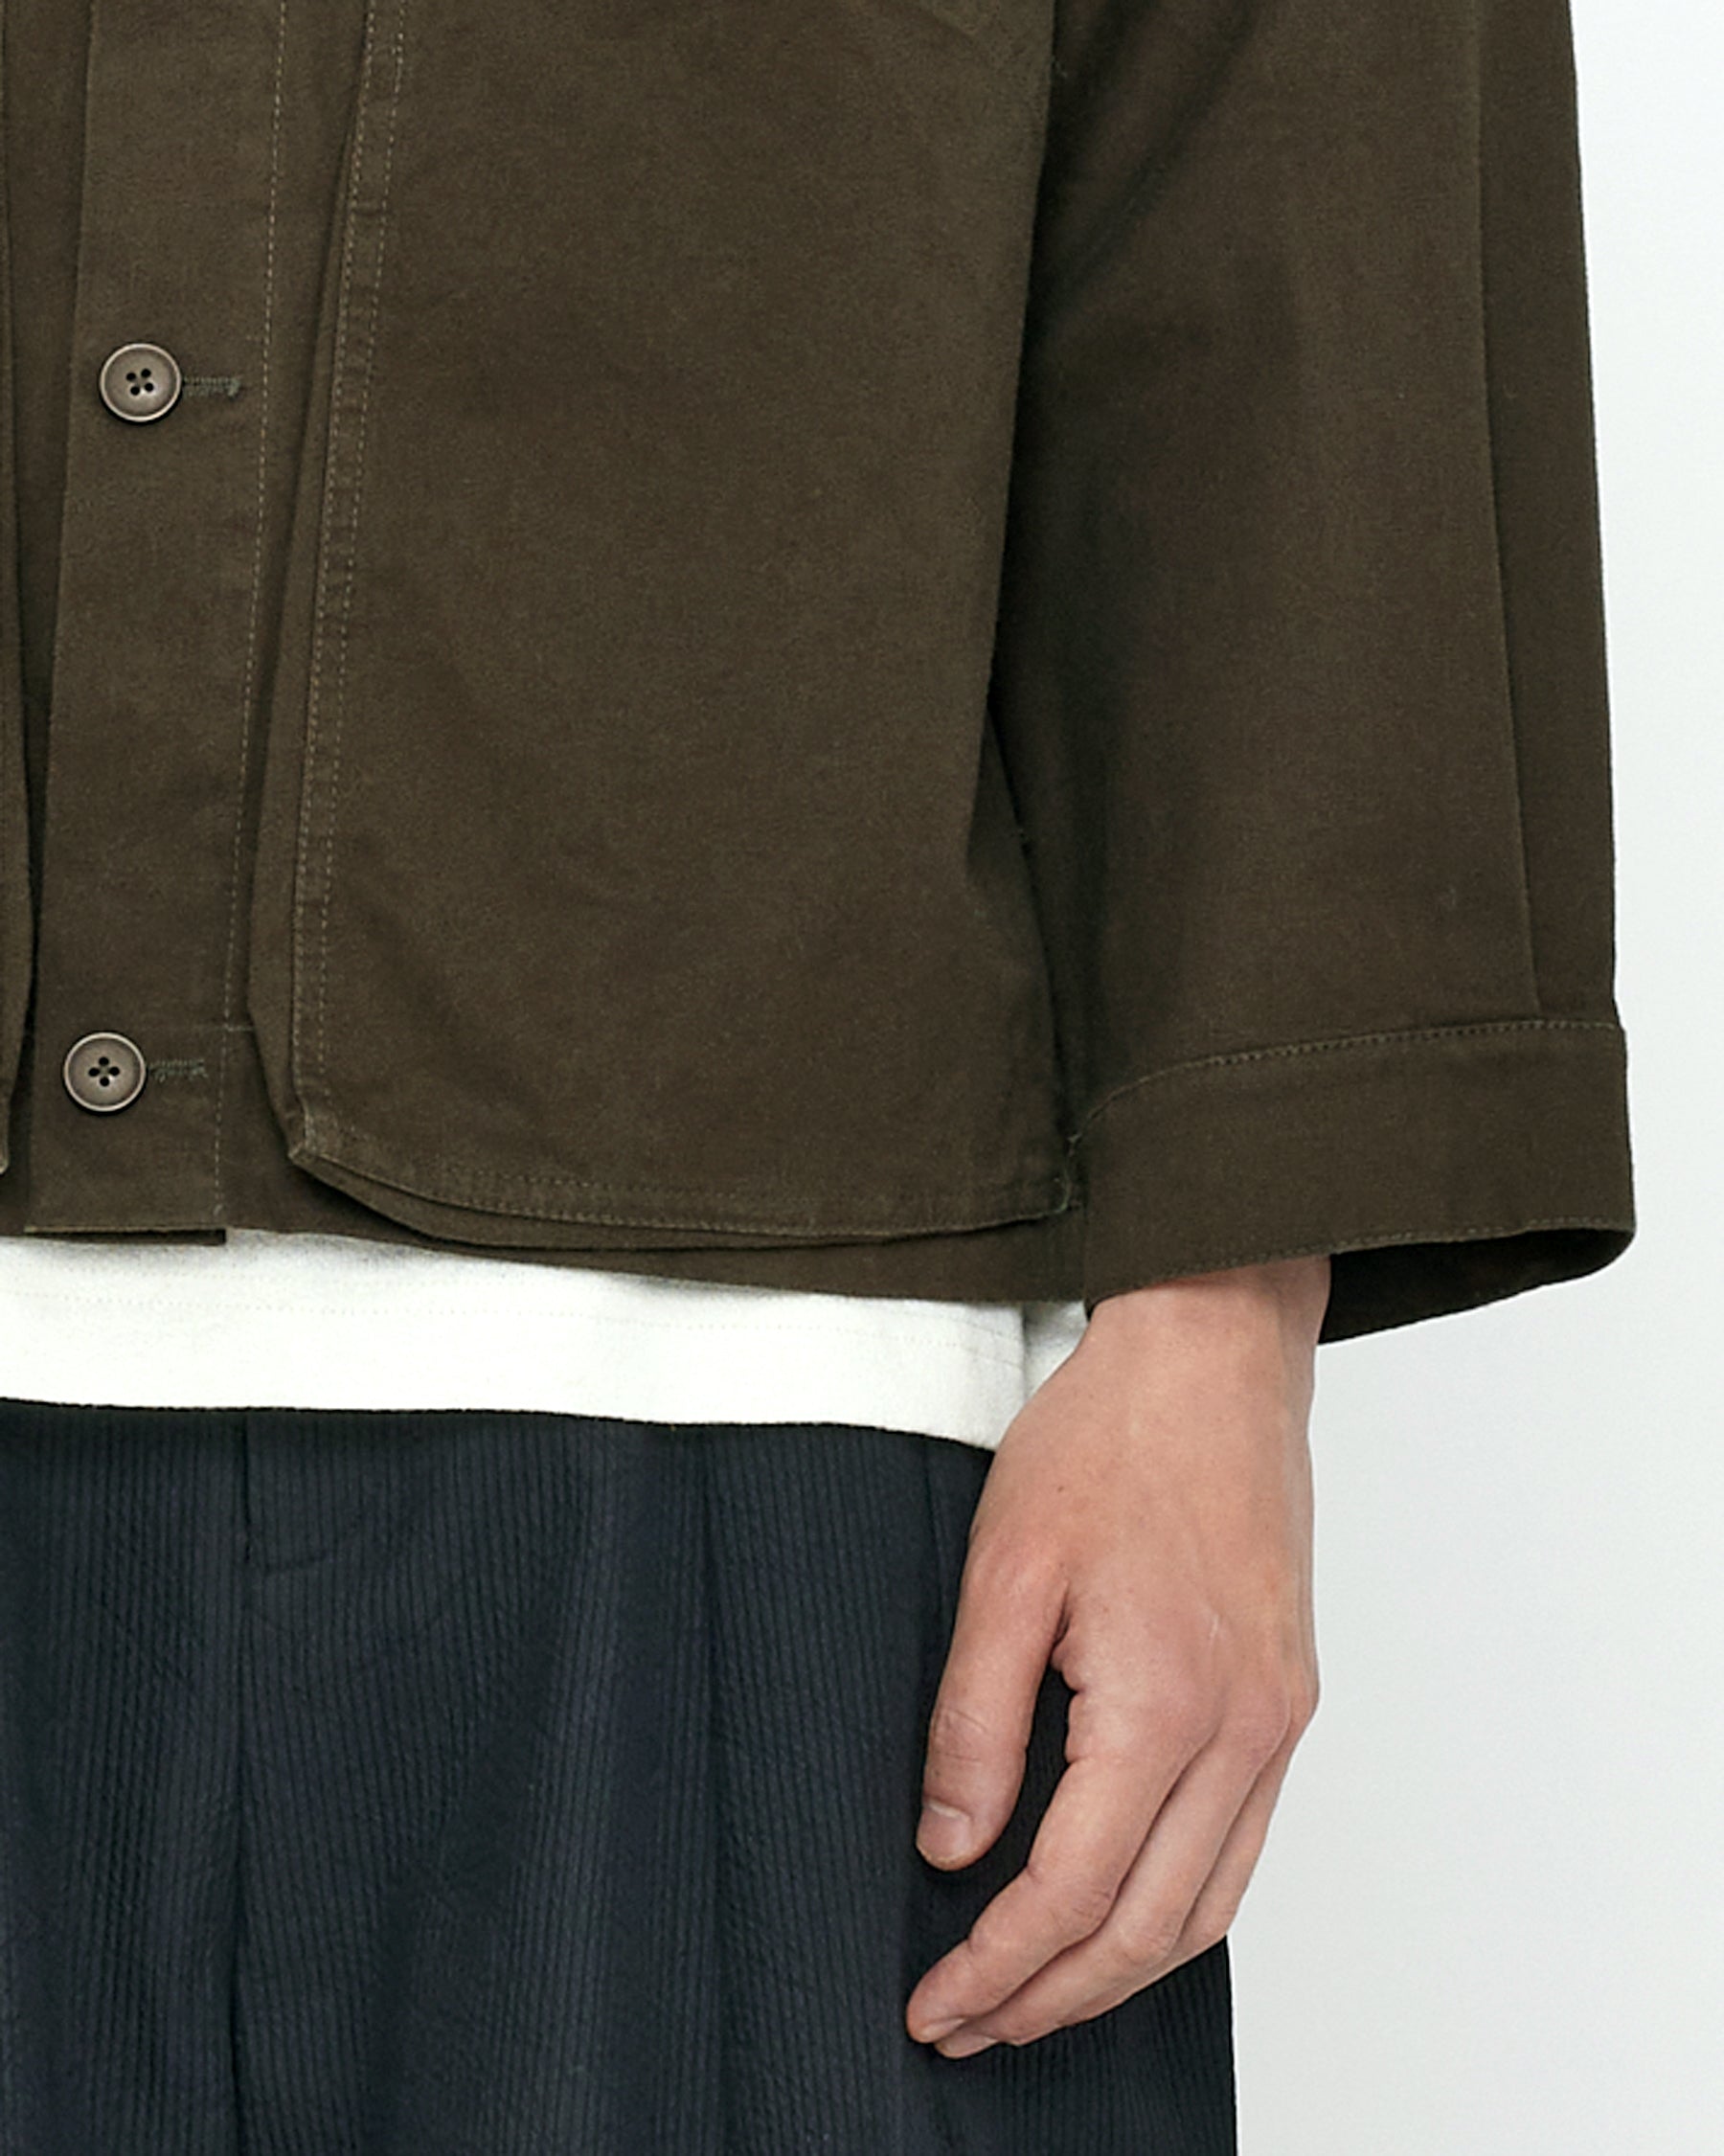 Signature Panel Pockets Shirt Jacket - Cotton Edition - Deep Olive